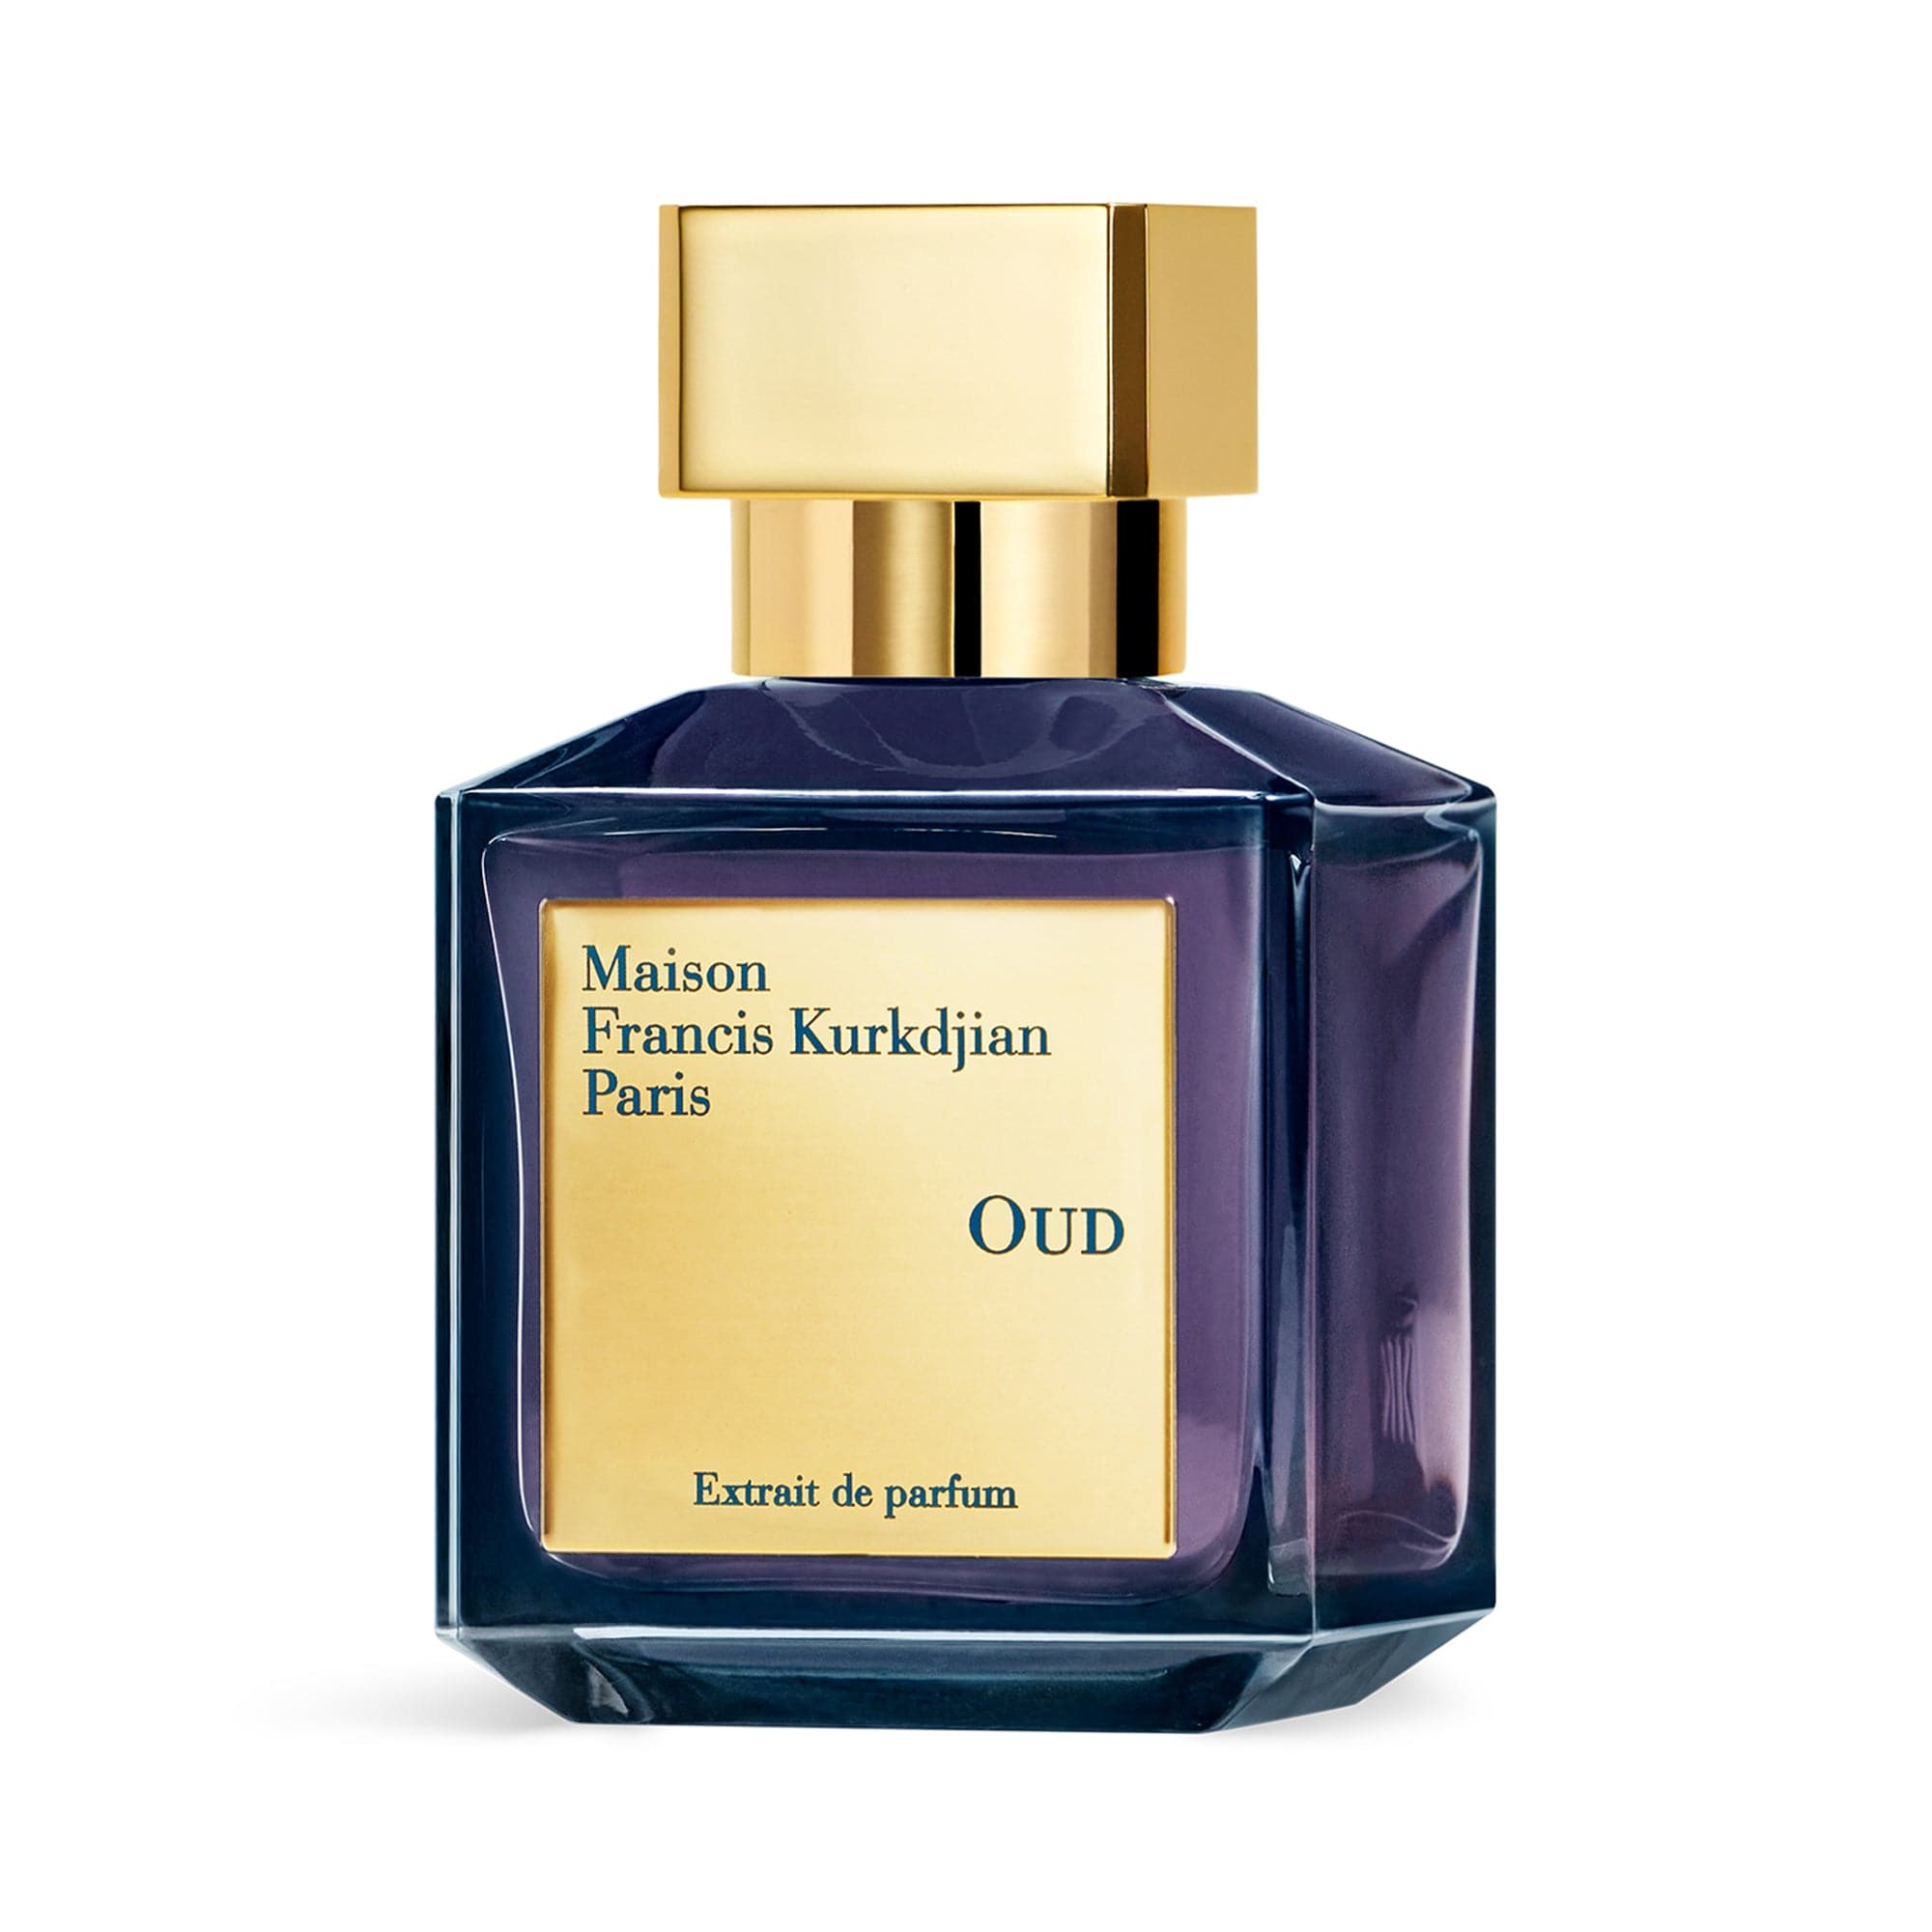 OUD Maison Francis Kurkdjian Perfume Extract